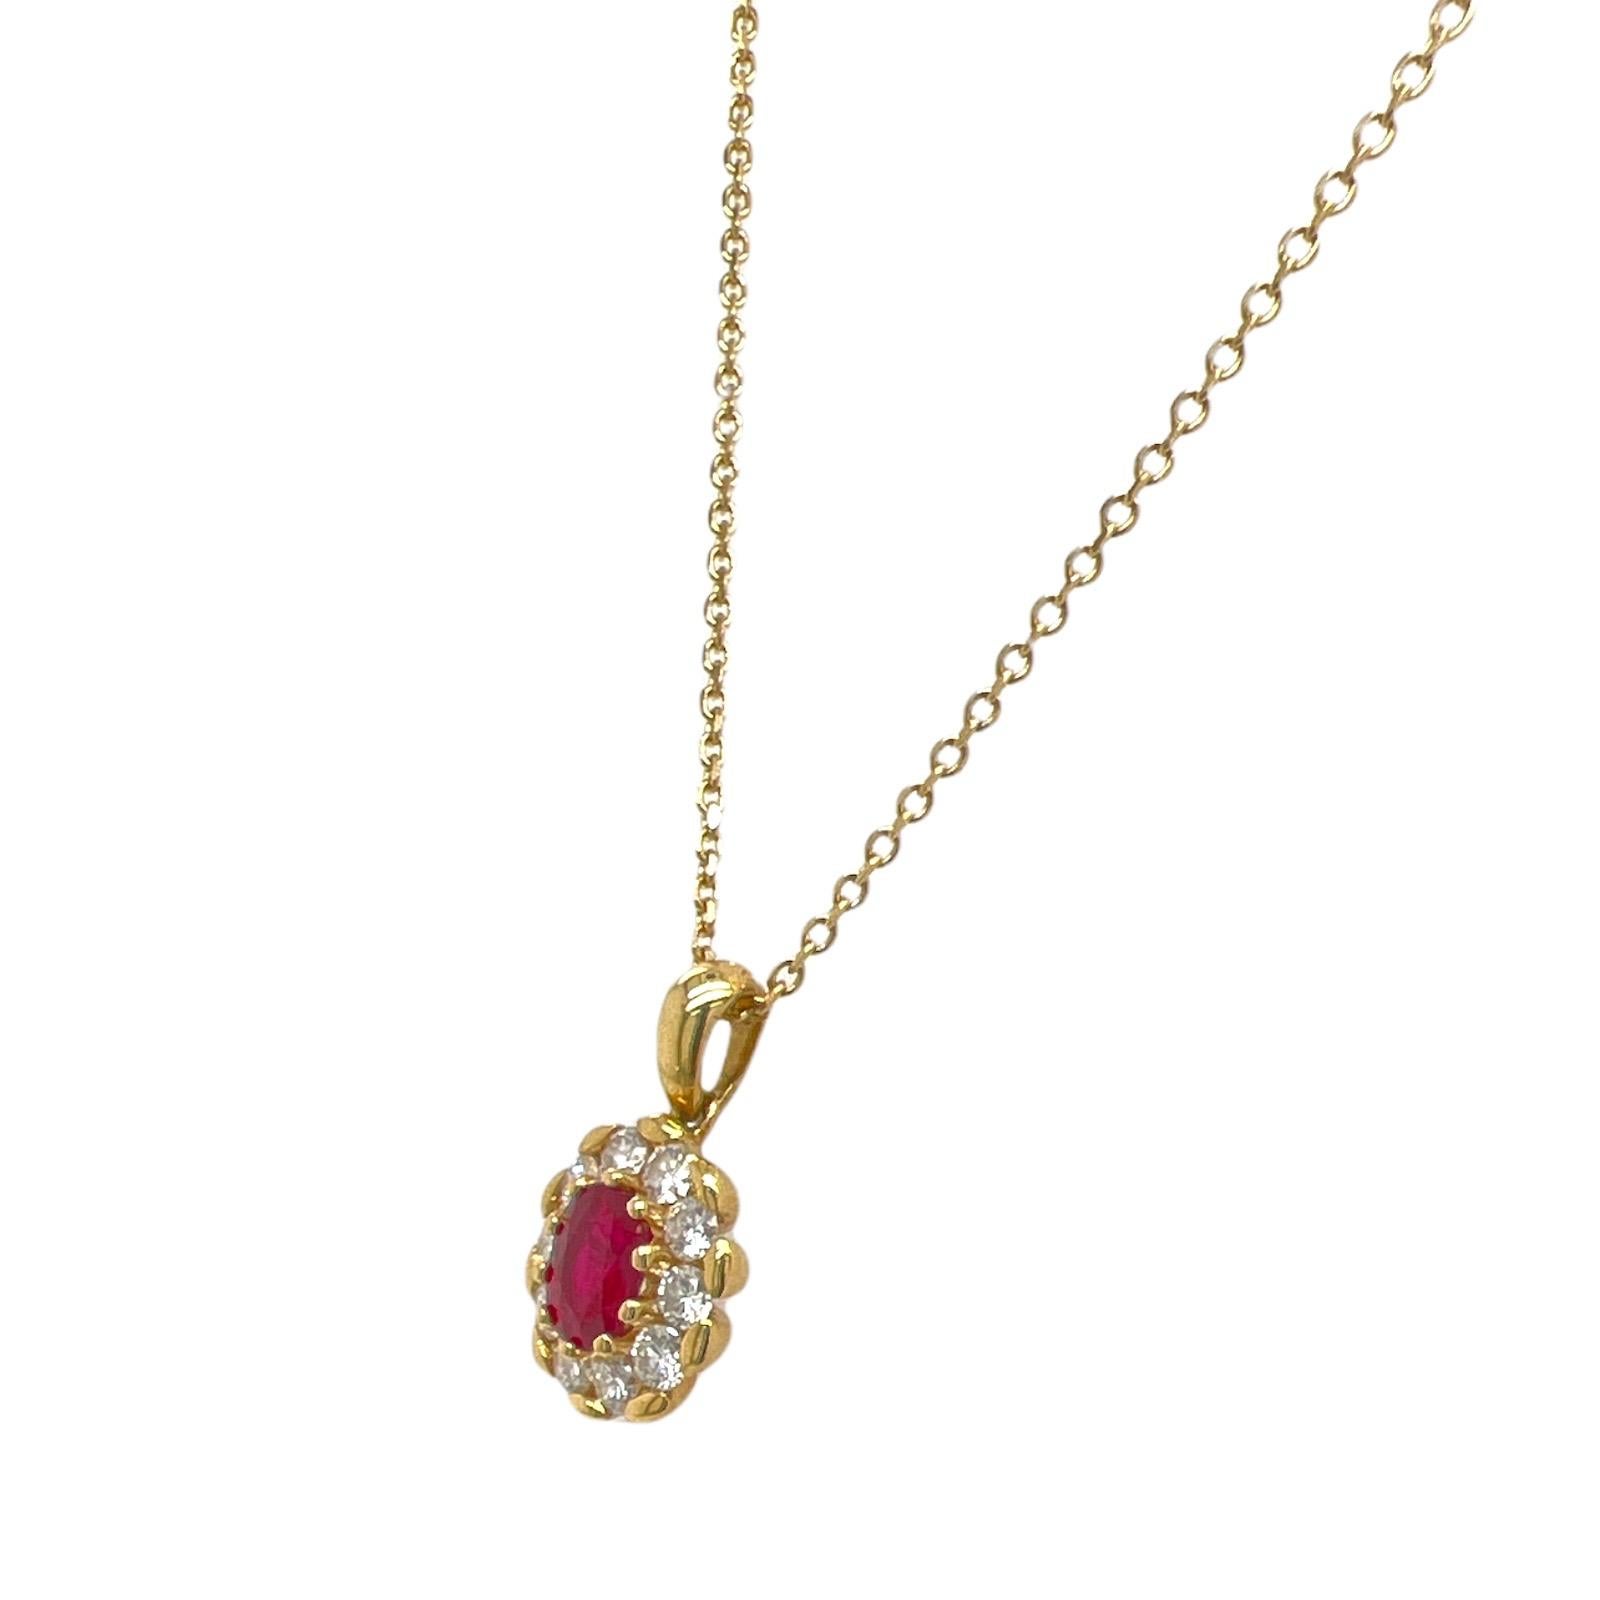 Oval Cut Burma Ruby Diamond Pendant Necklace 18 Karat Yellow Gold AGL Certified Ruby